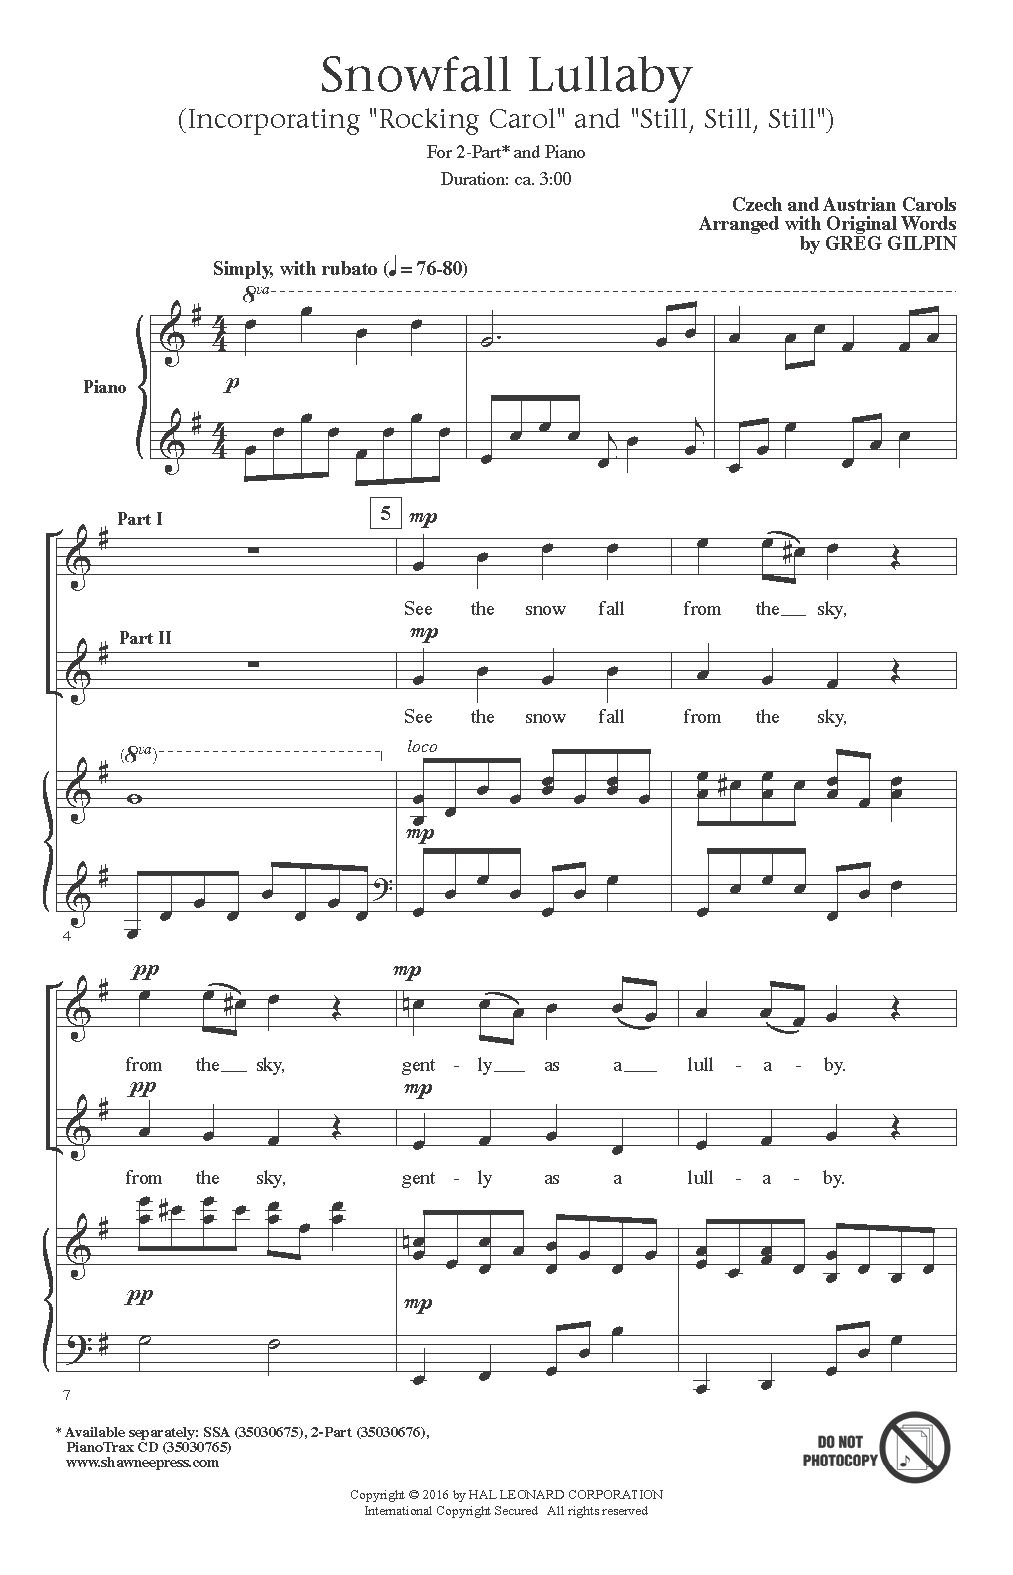 Greg Gilpin Snowfall Lullaby Sheet Music Notes & Chords for 2-Part Choir - Download or Print PDF